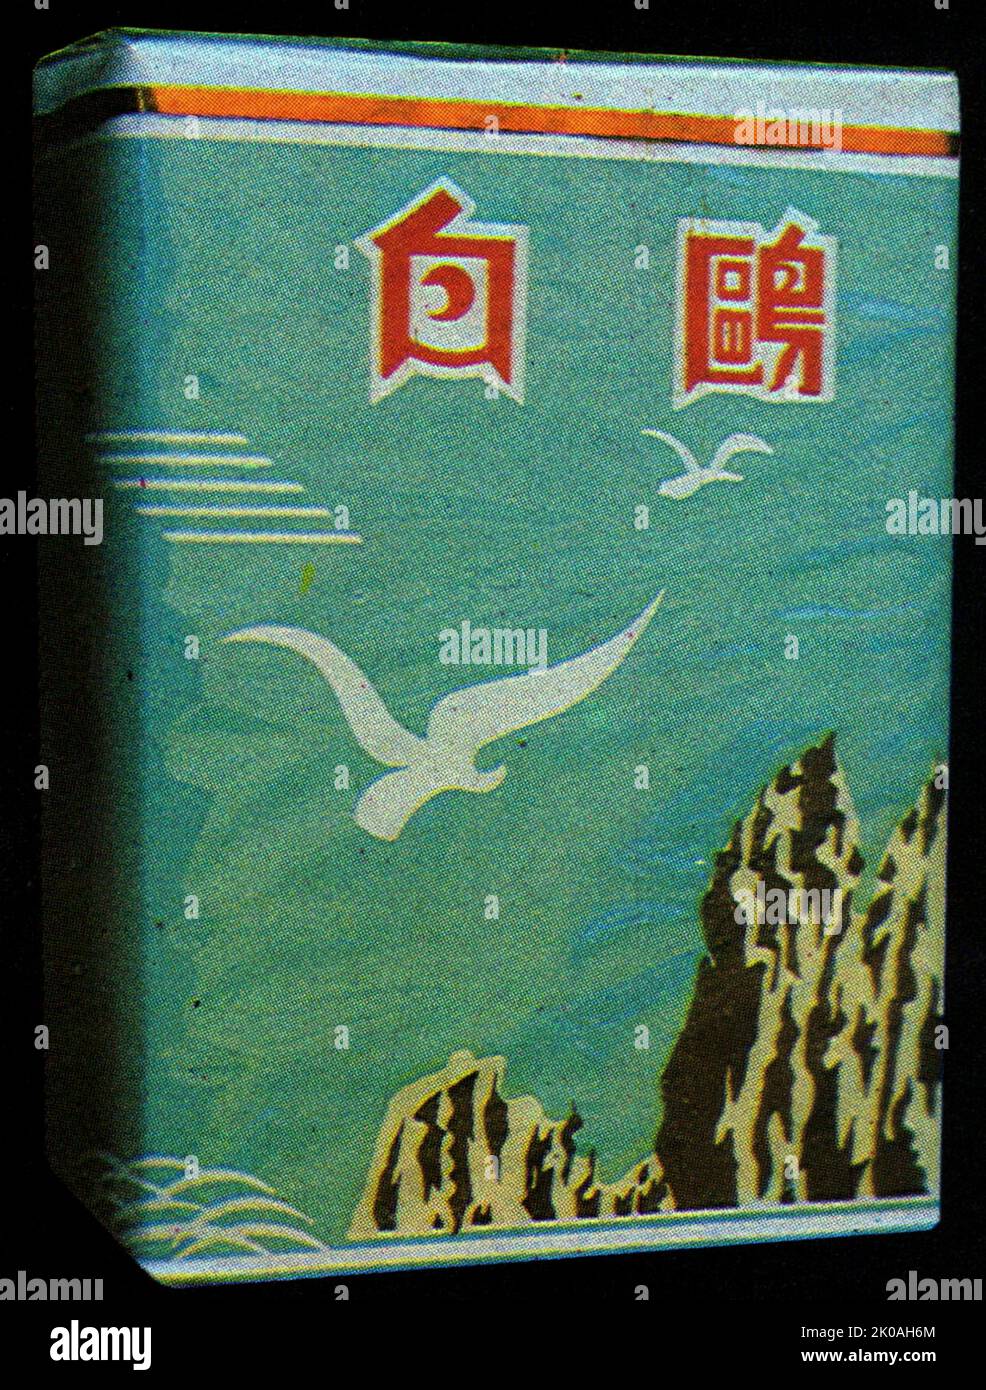 Paquet de cigarettes avec 'Baekjo (Swan)' de 1948 Corée Banque D'Images